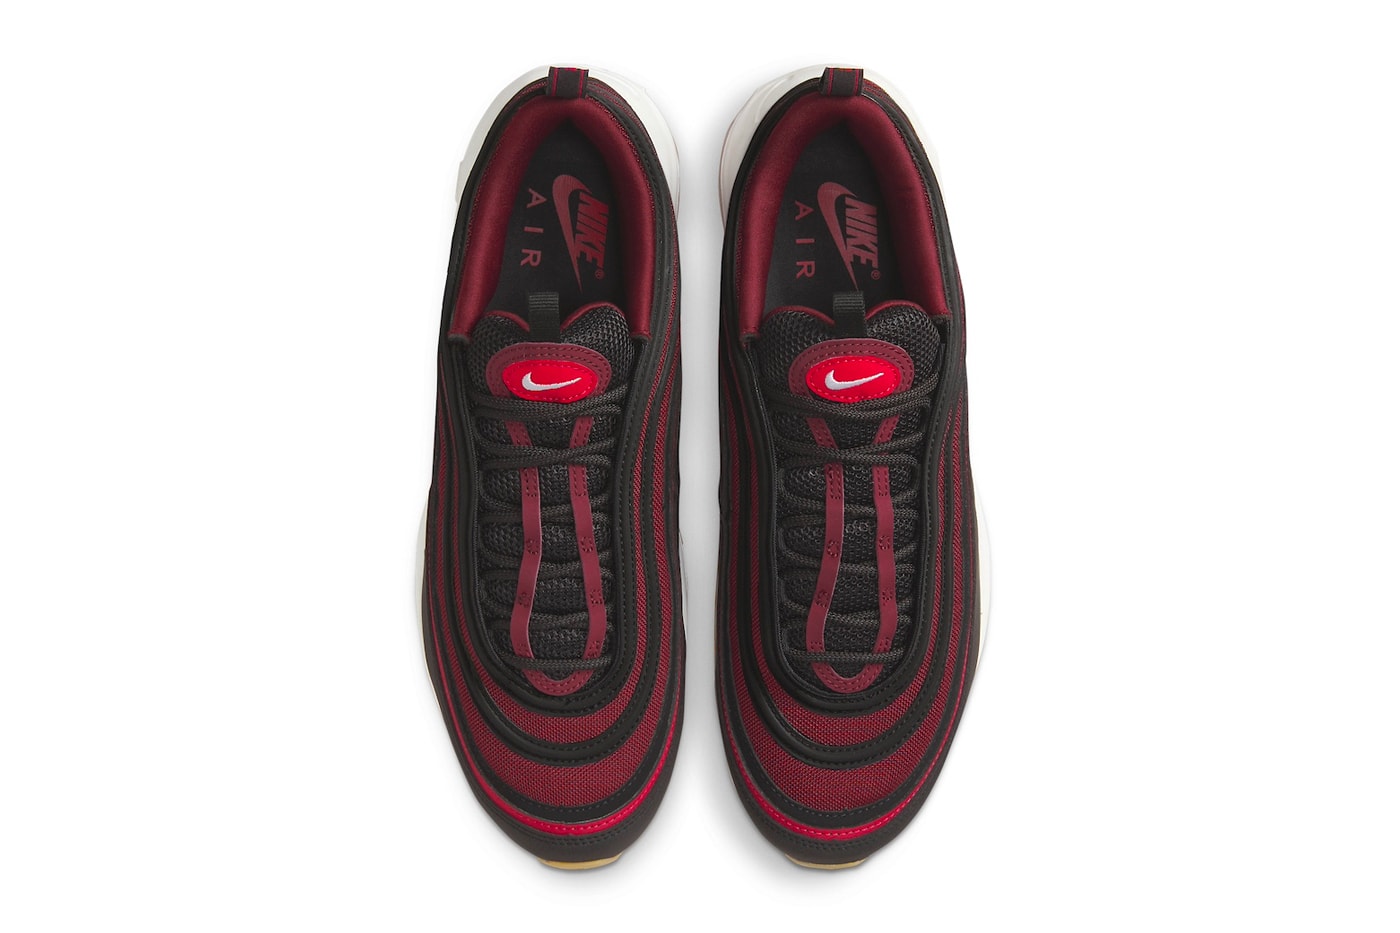 Nike Air Max 96 Gets Hit With the Classic "Black/Team Scarlet" Colorway 921826-022 Black/Team Scarlet-Gum Medium Brown release info red black